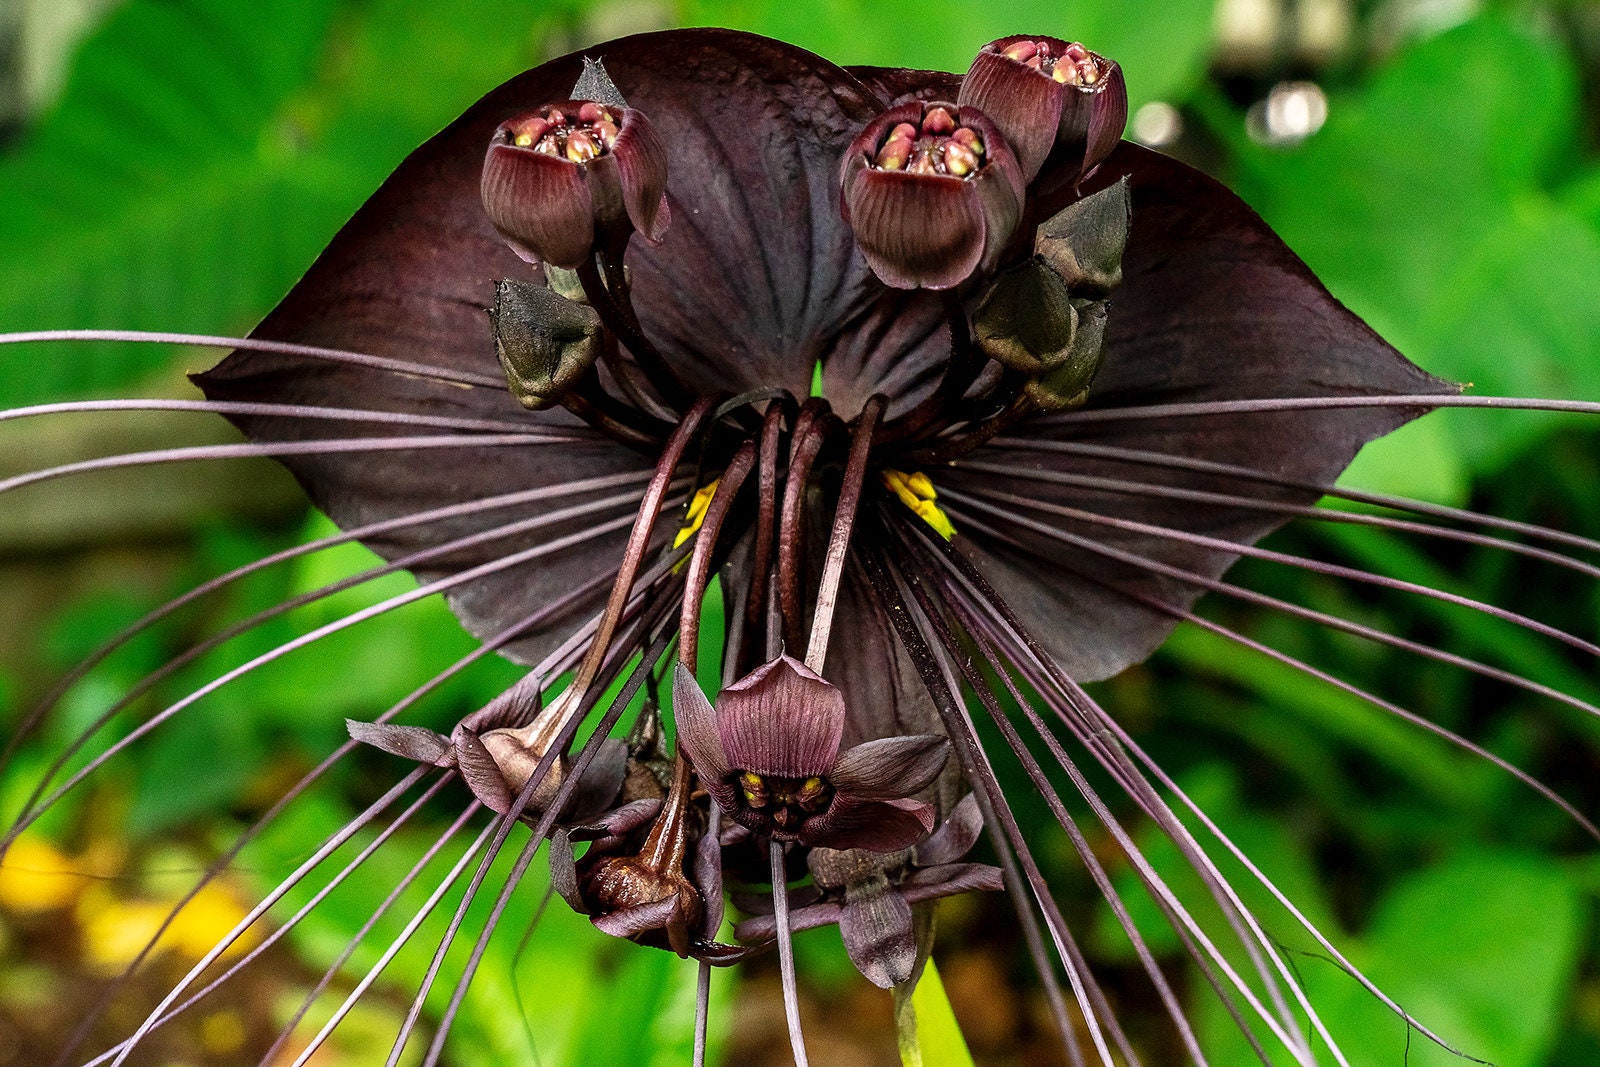 10x funny rare black bat tacca chantrieri whiskers flower seeds garden plant BB 